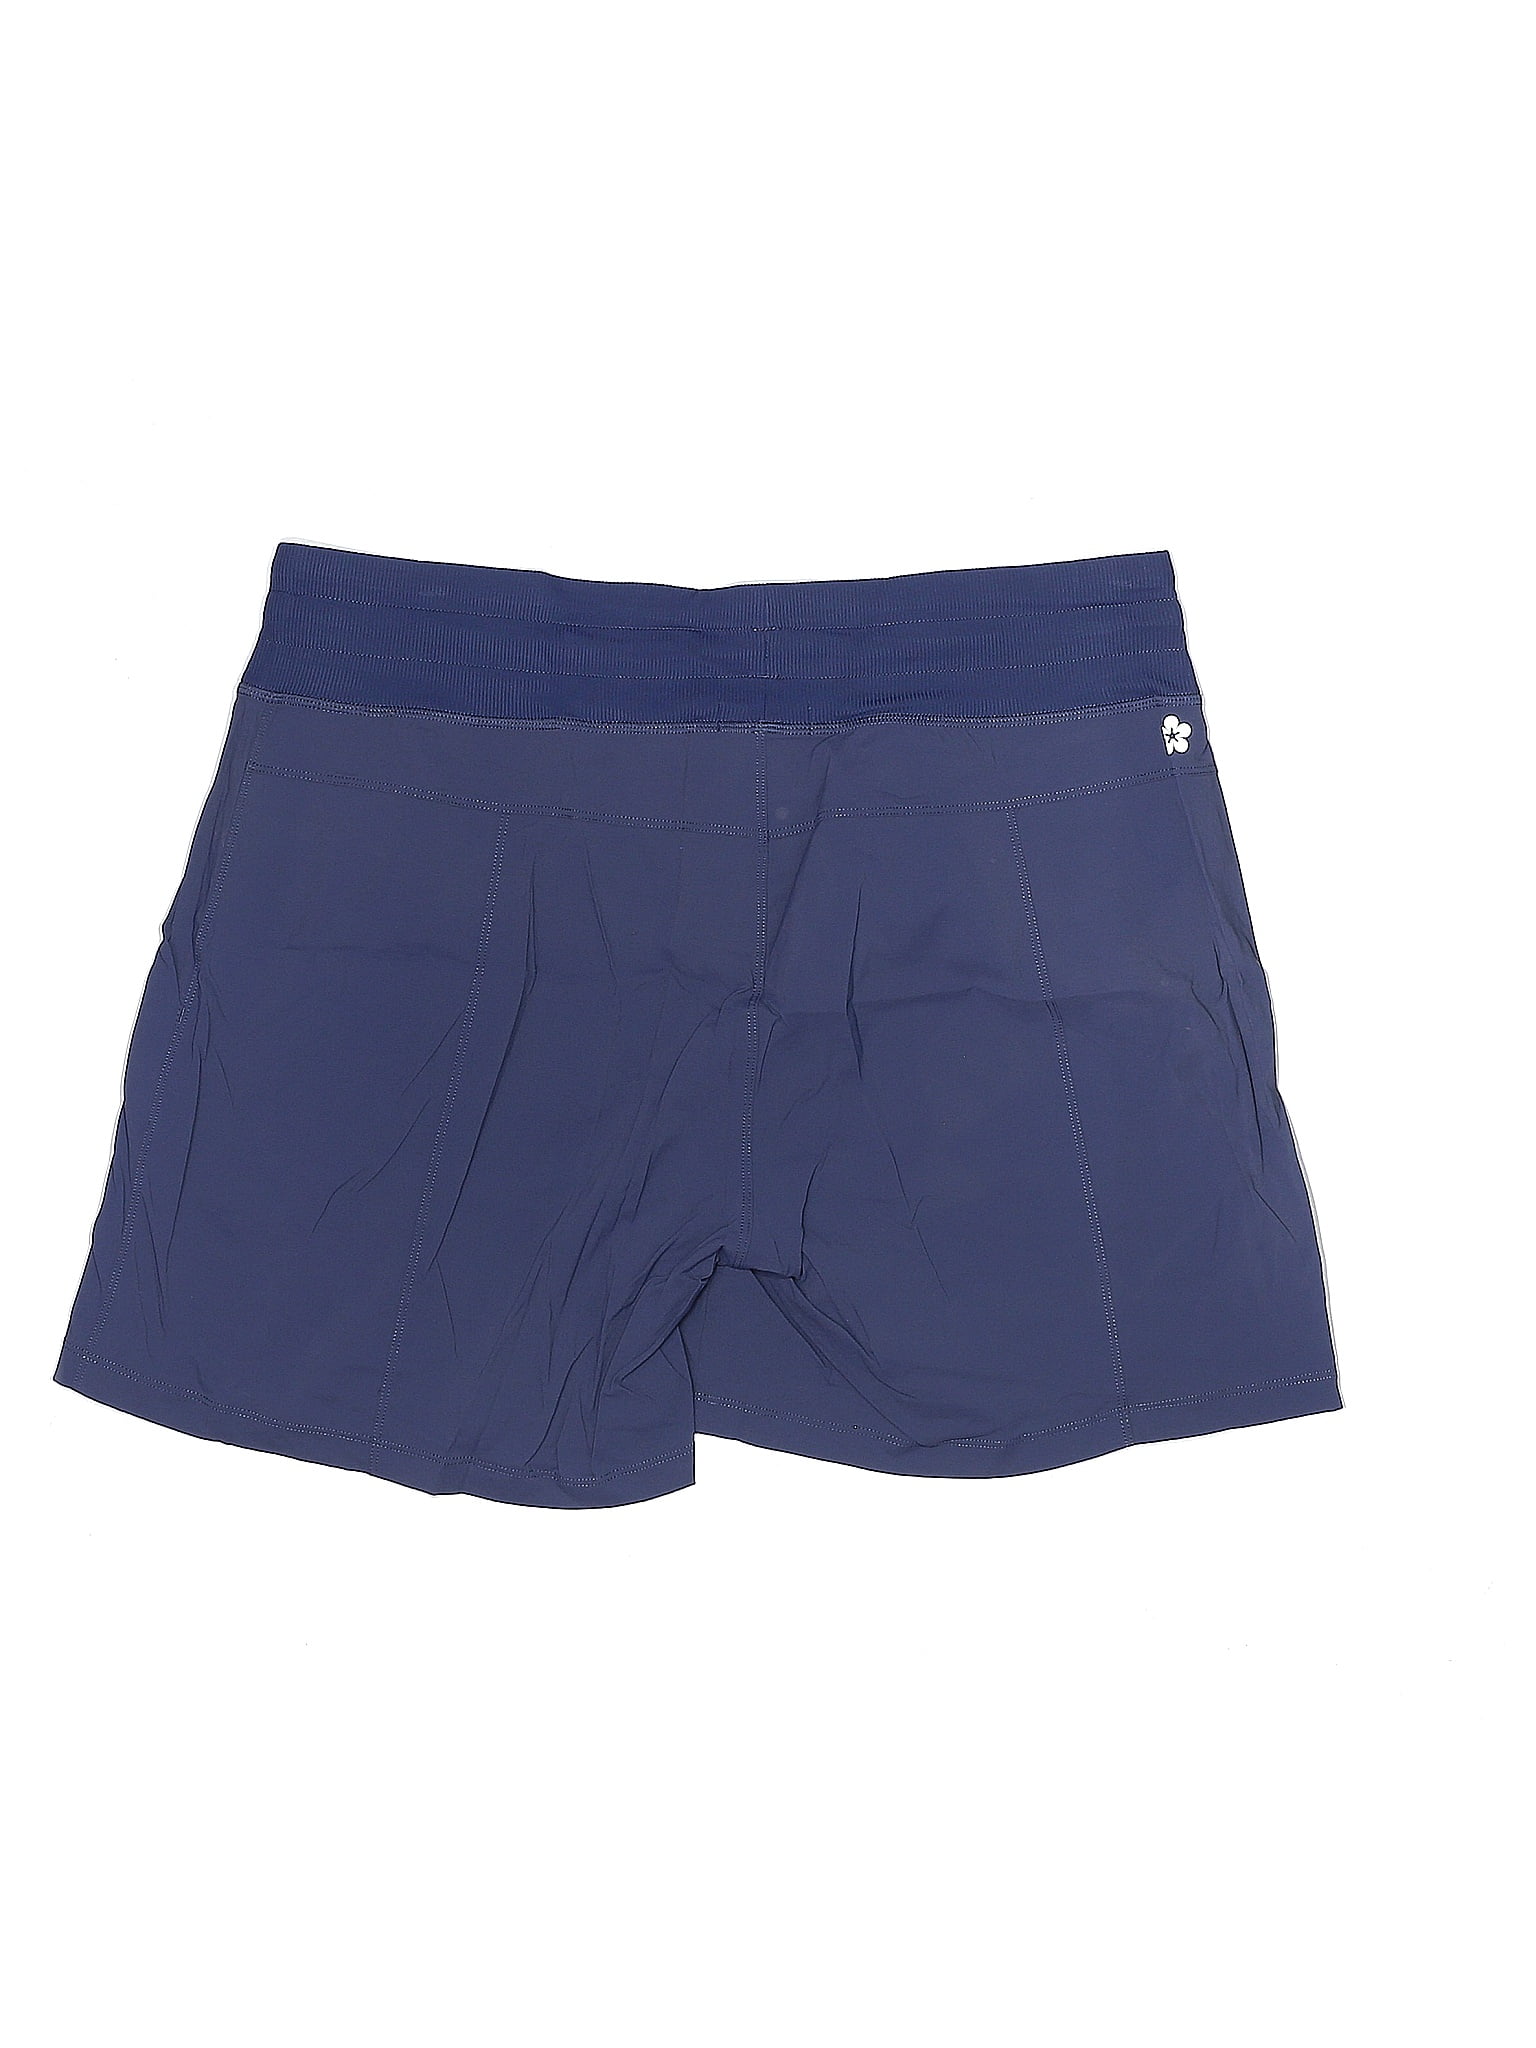 Tuff Athletics Solid Blue Shorts Size XXL - 52% off